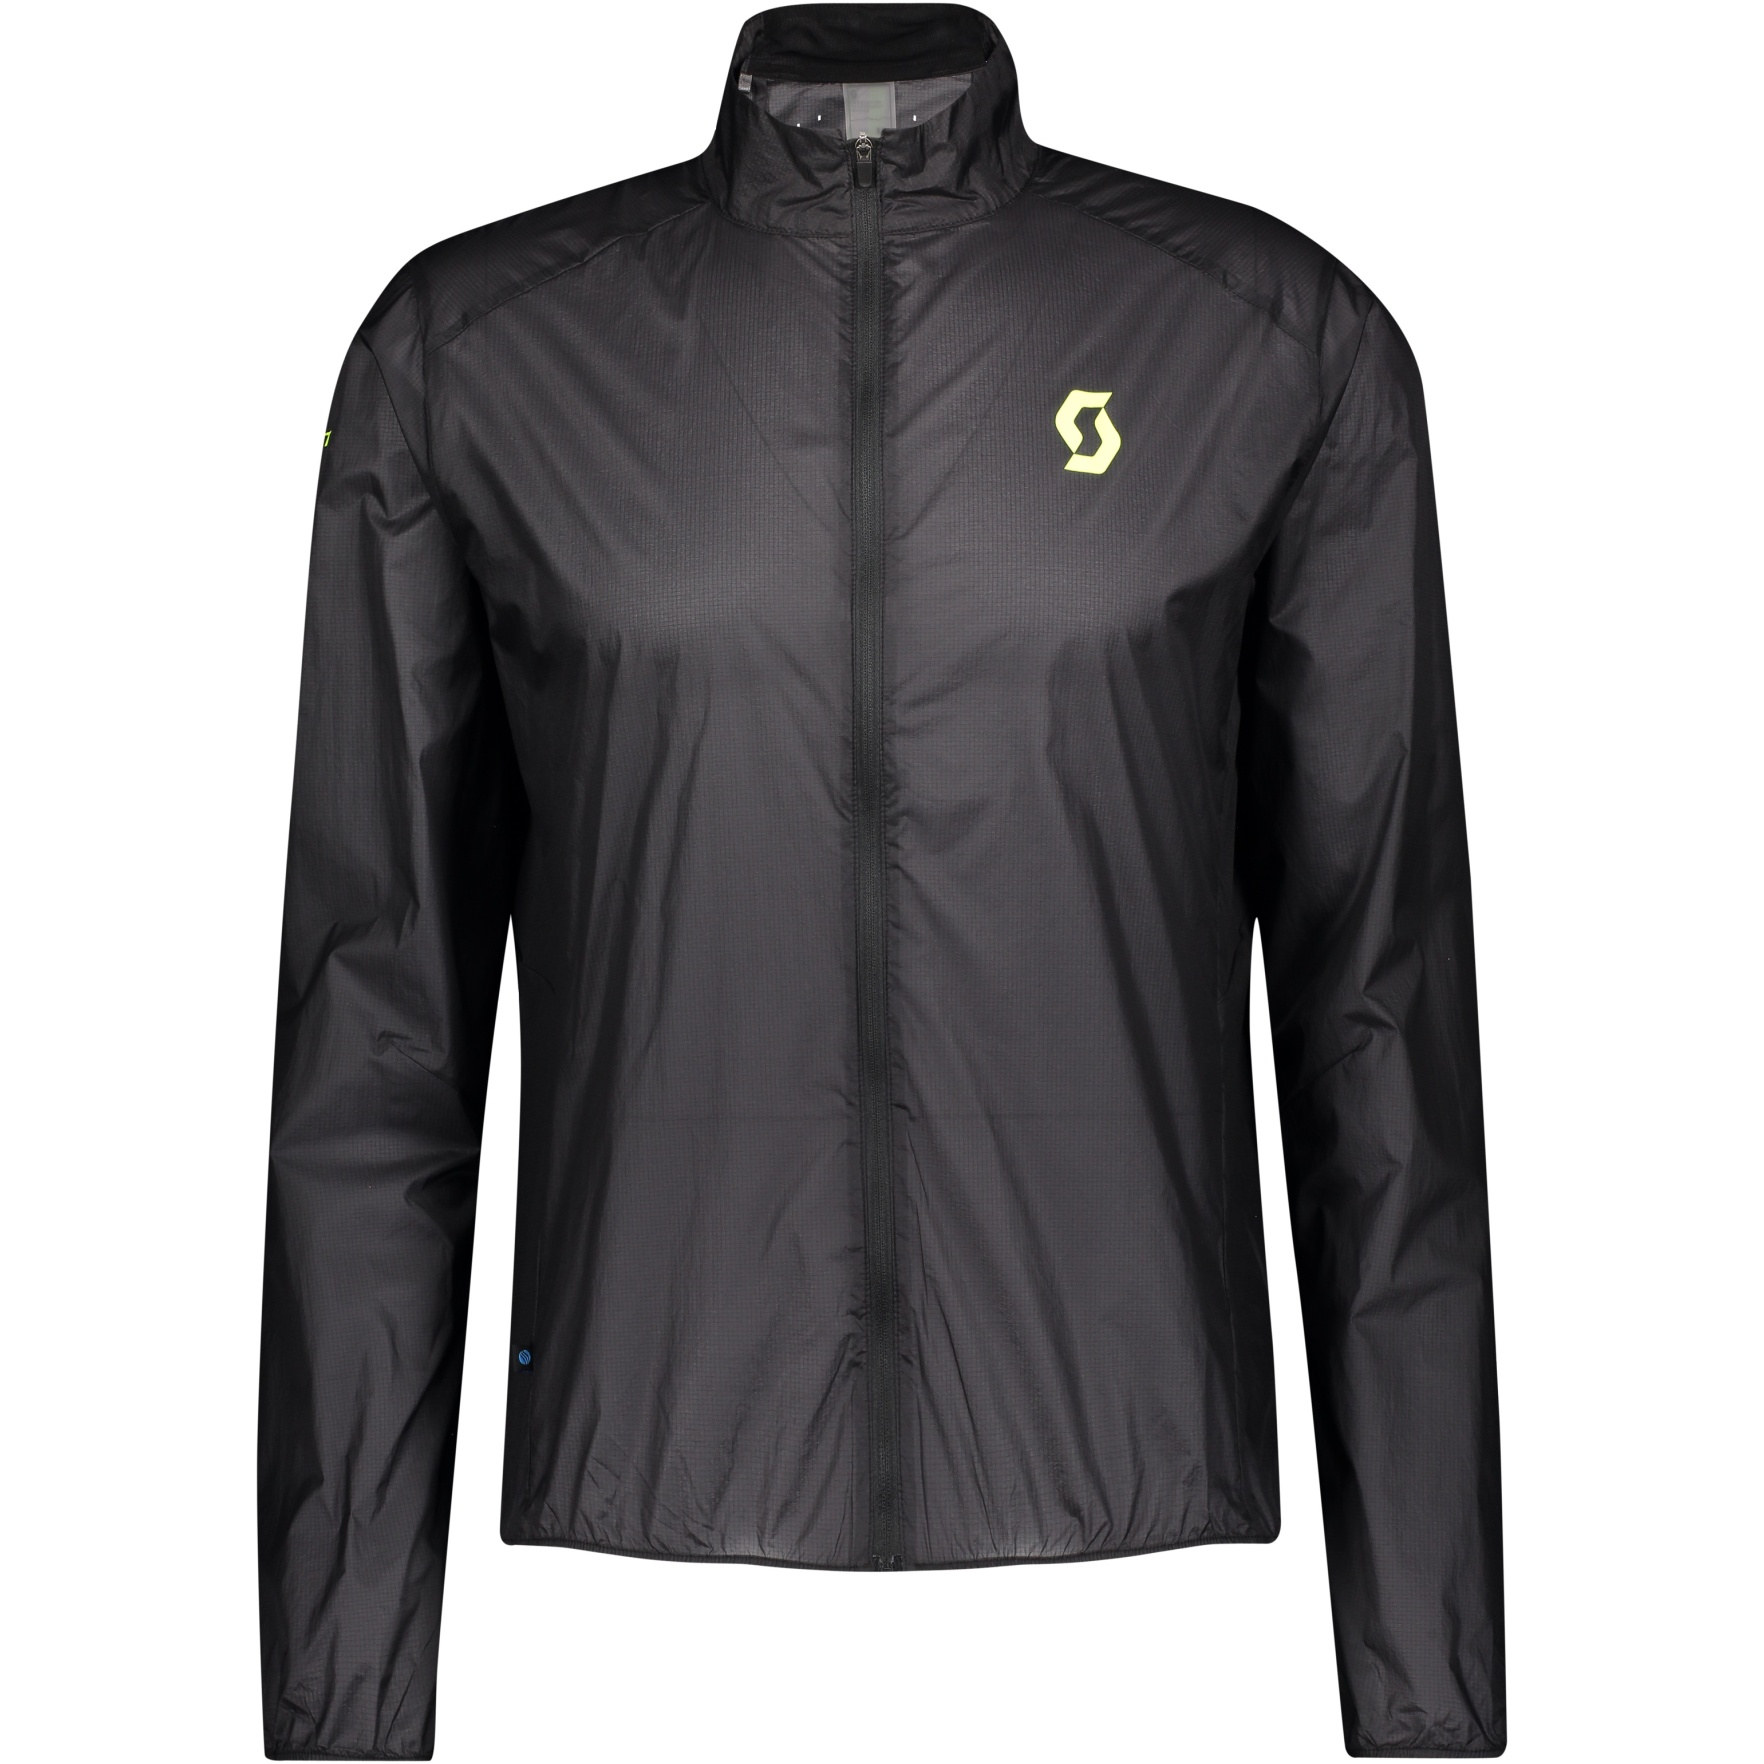 Productfoto van SCOTT RC Run Windbreaker Jacket - black/yellow